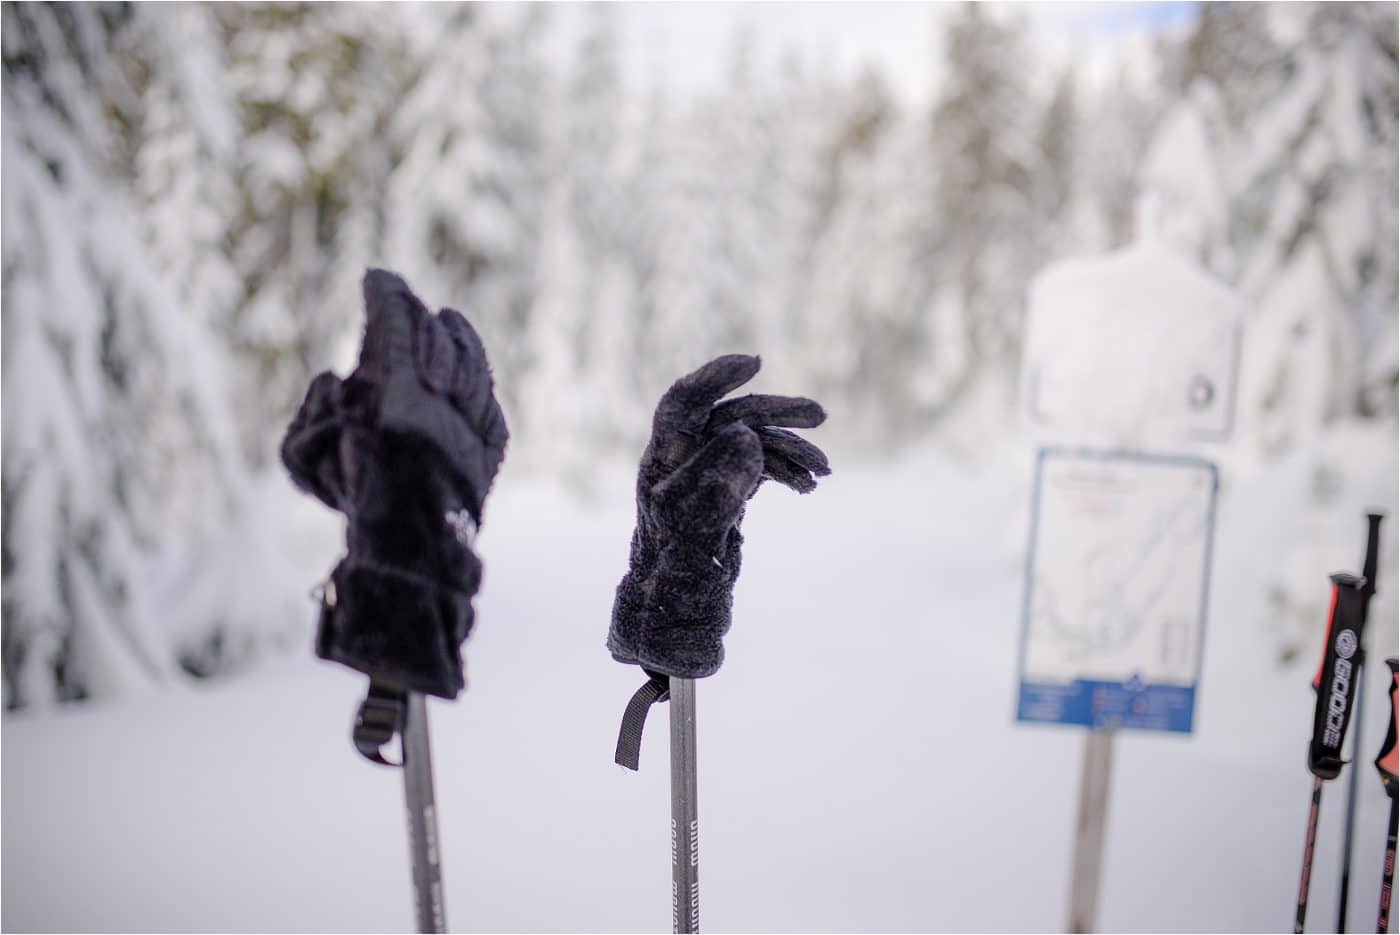 winter gloves on ski poles in the winter snow